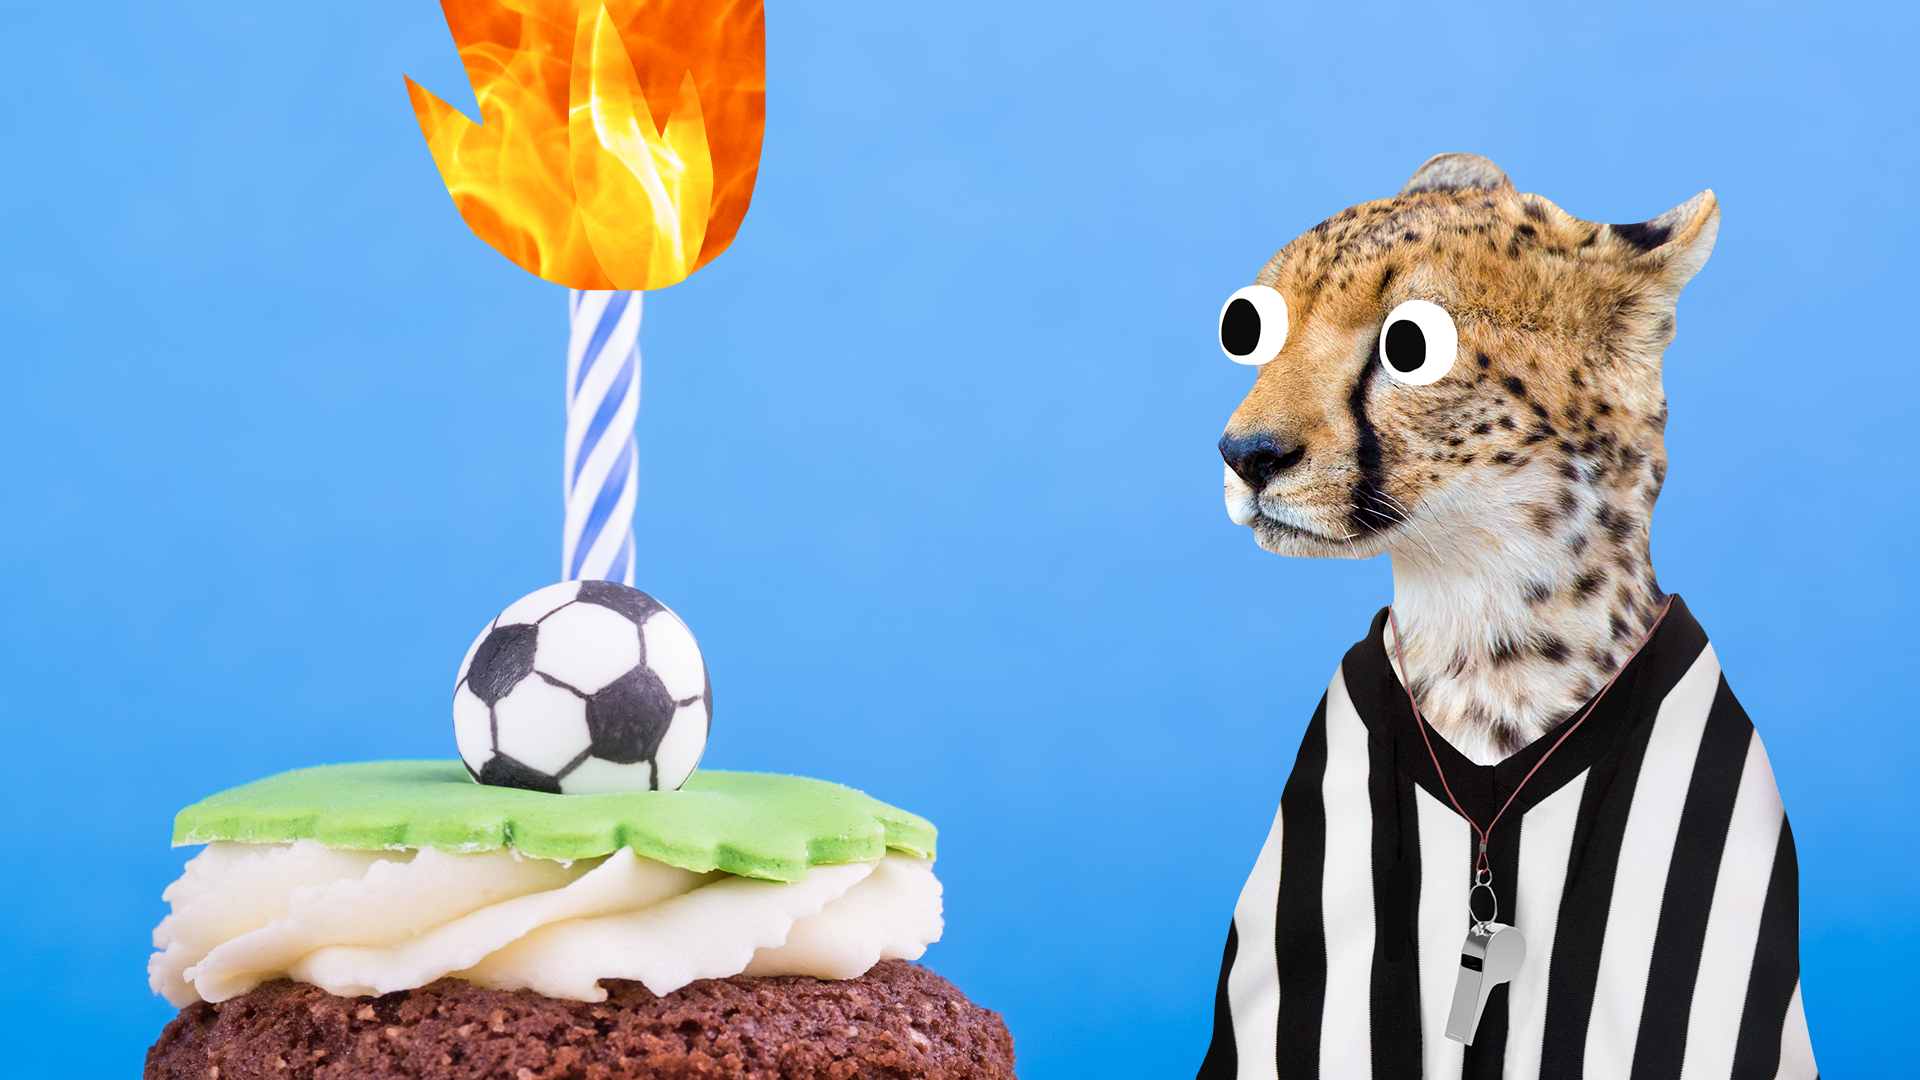 Football birthday cake and cheetah referee